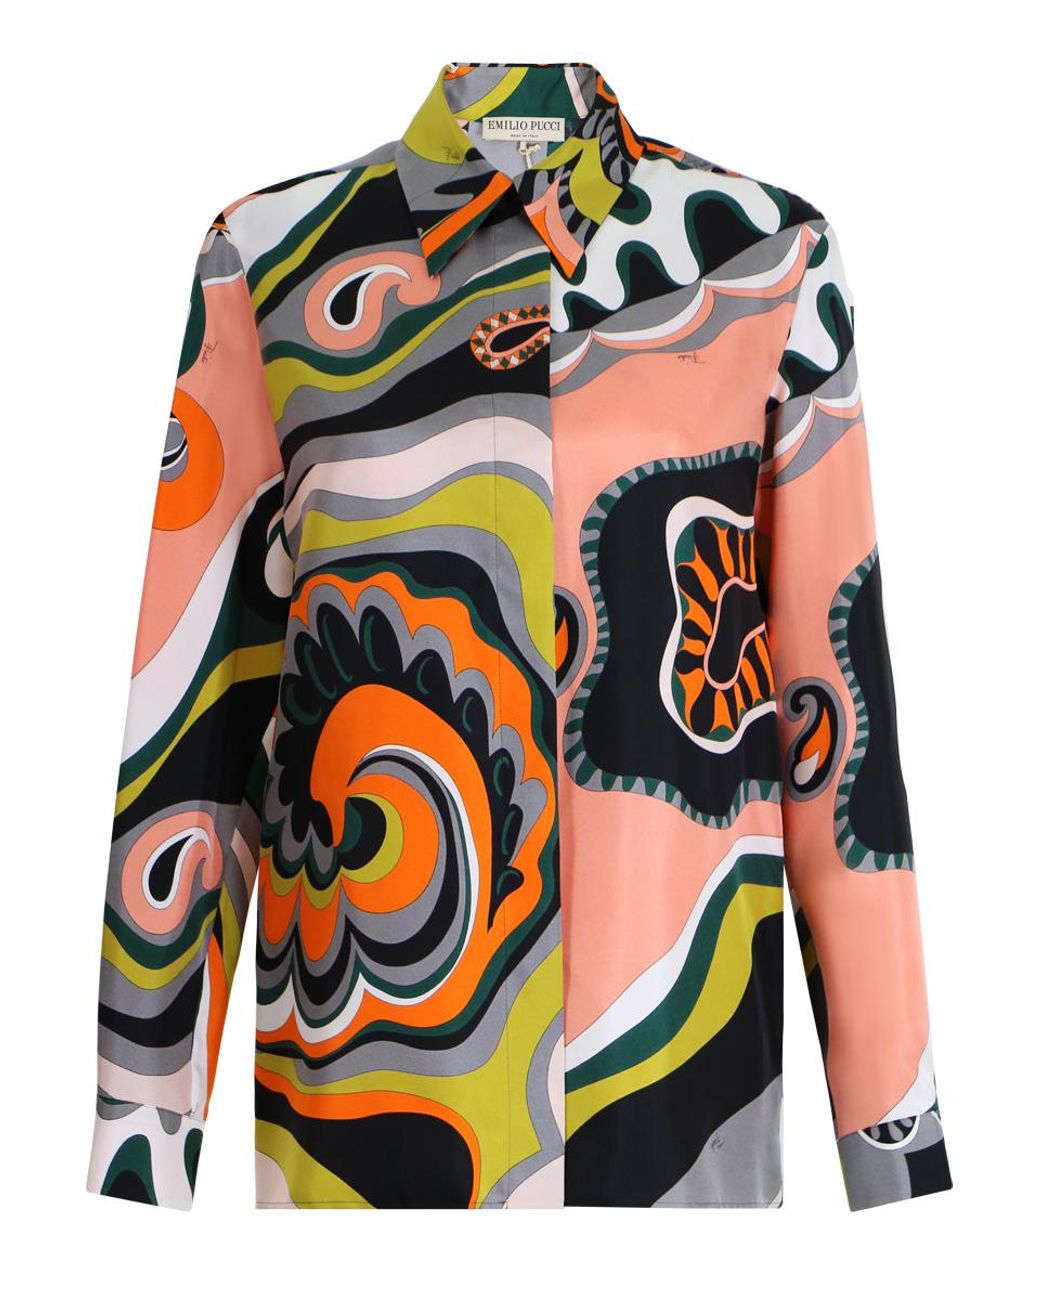 Lyst - Emilio Pucci Macro Paisley Print Shirt Grey/orange in Gray